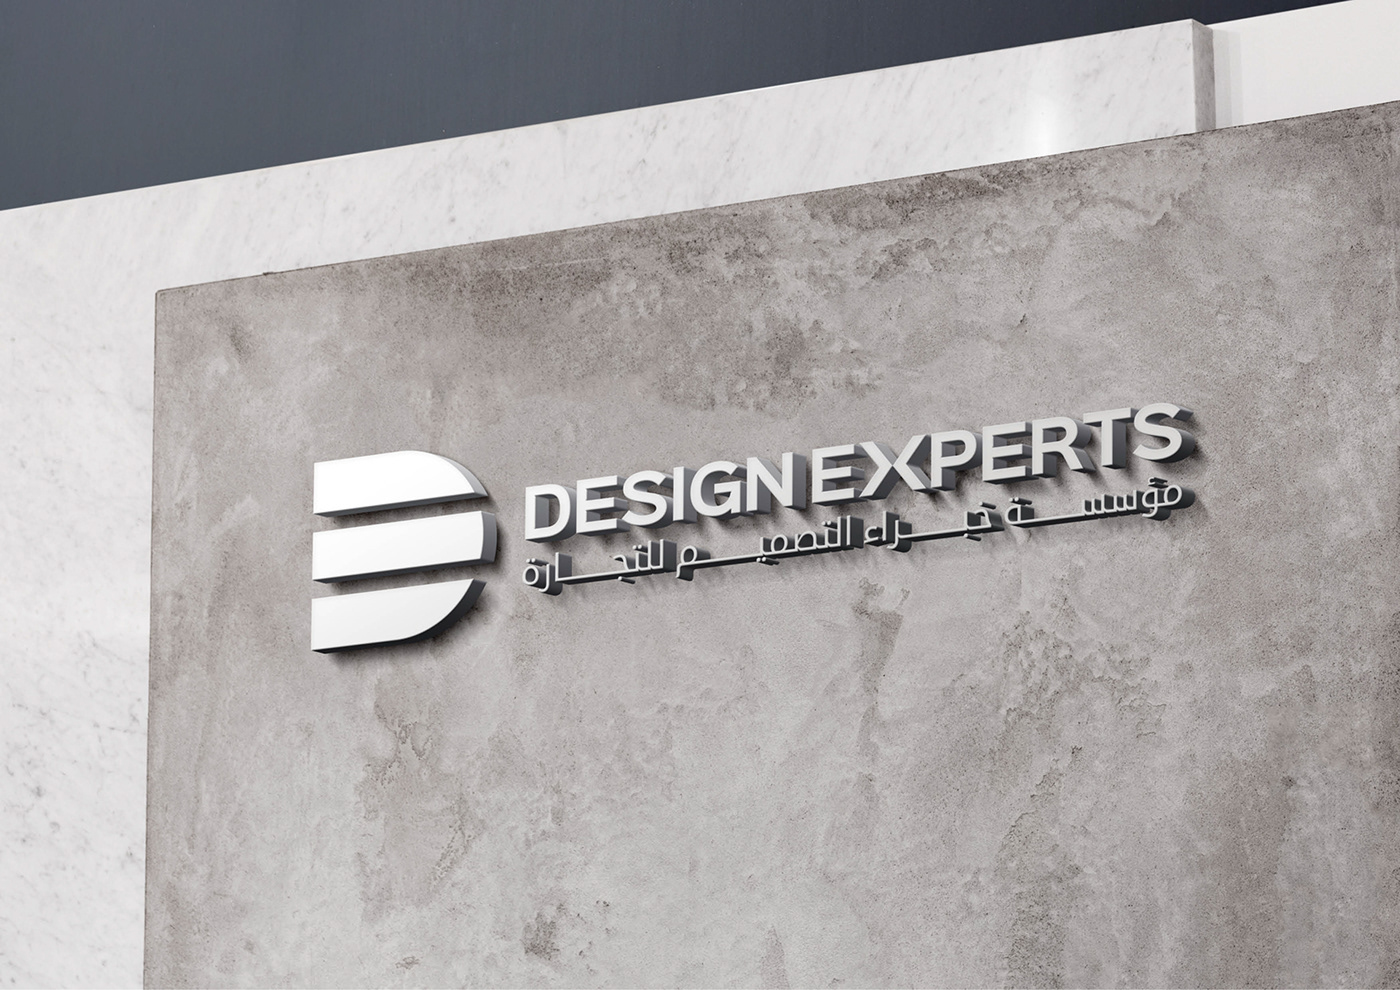 architects de design experts graphics Interior